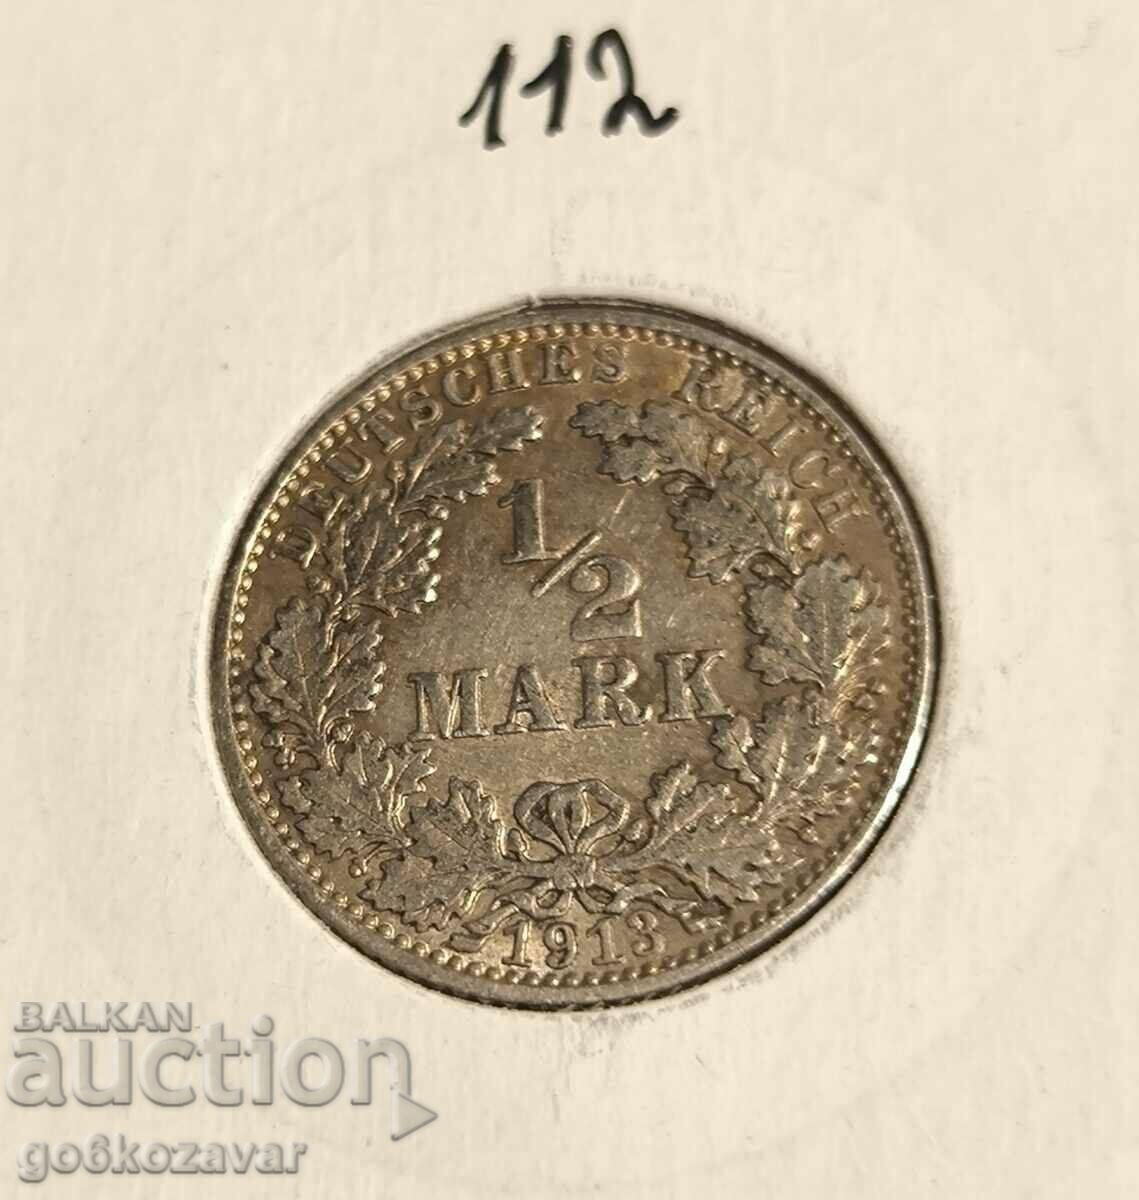 Germany 1/2 mark 1913 Silver!